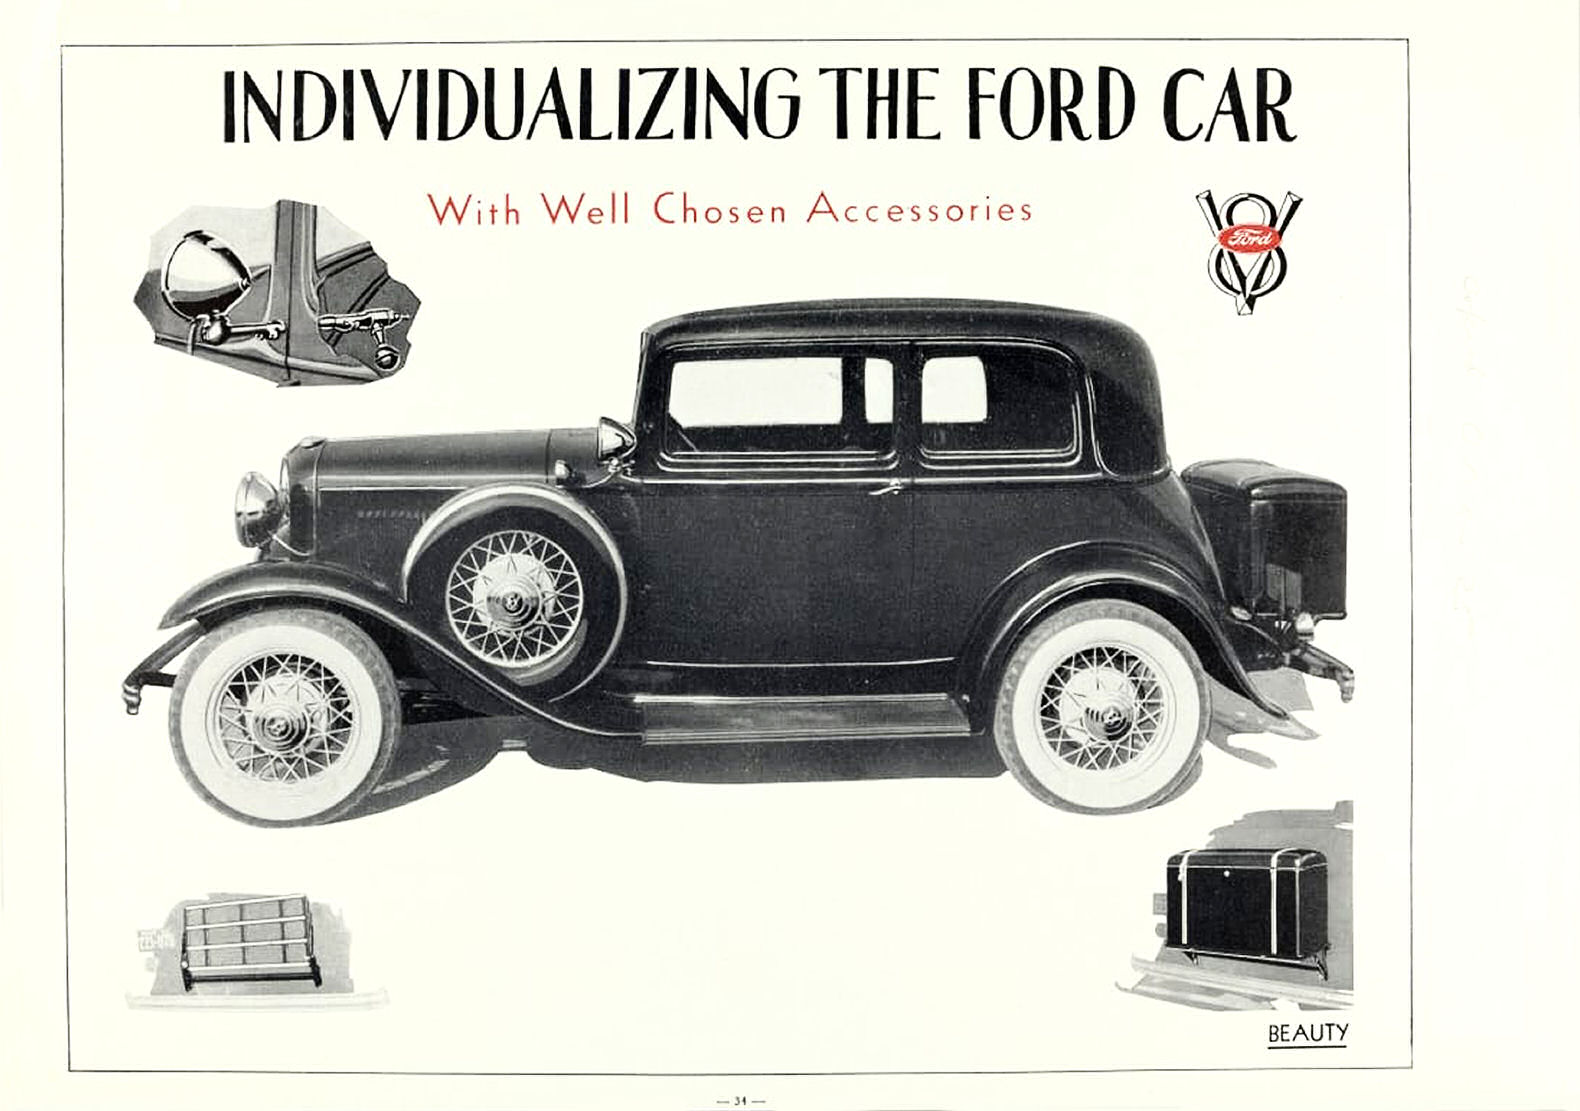 1932_Ford_Full_Line_Prestige-34